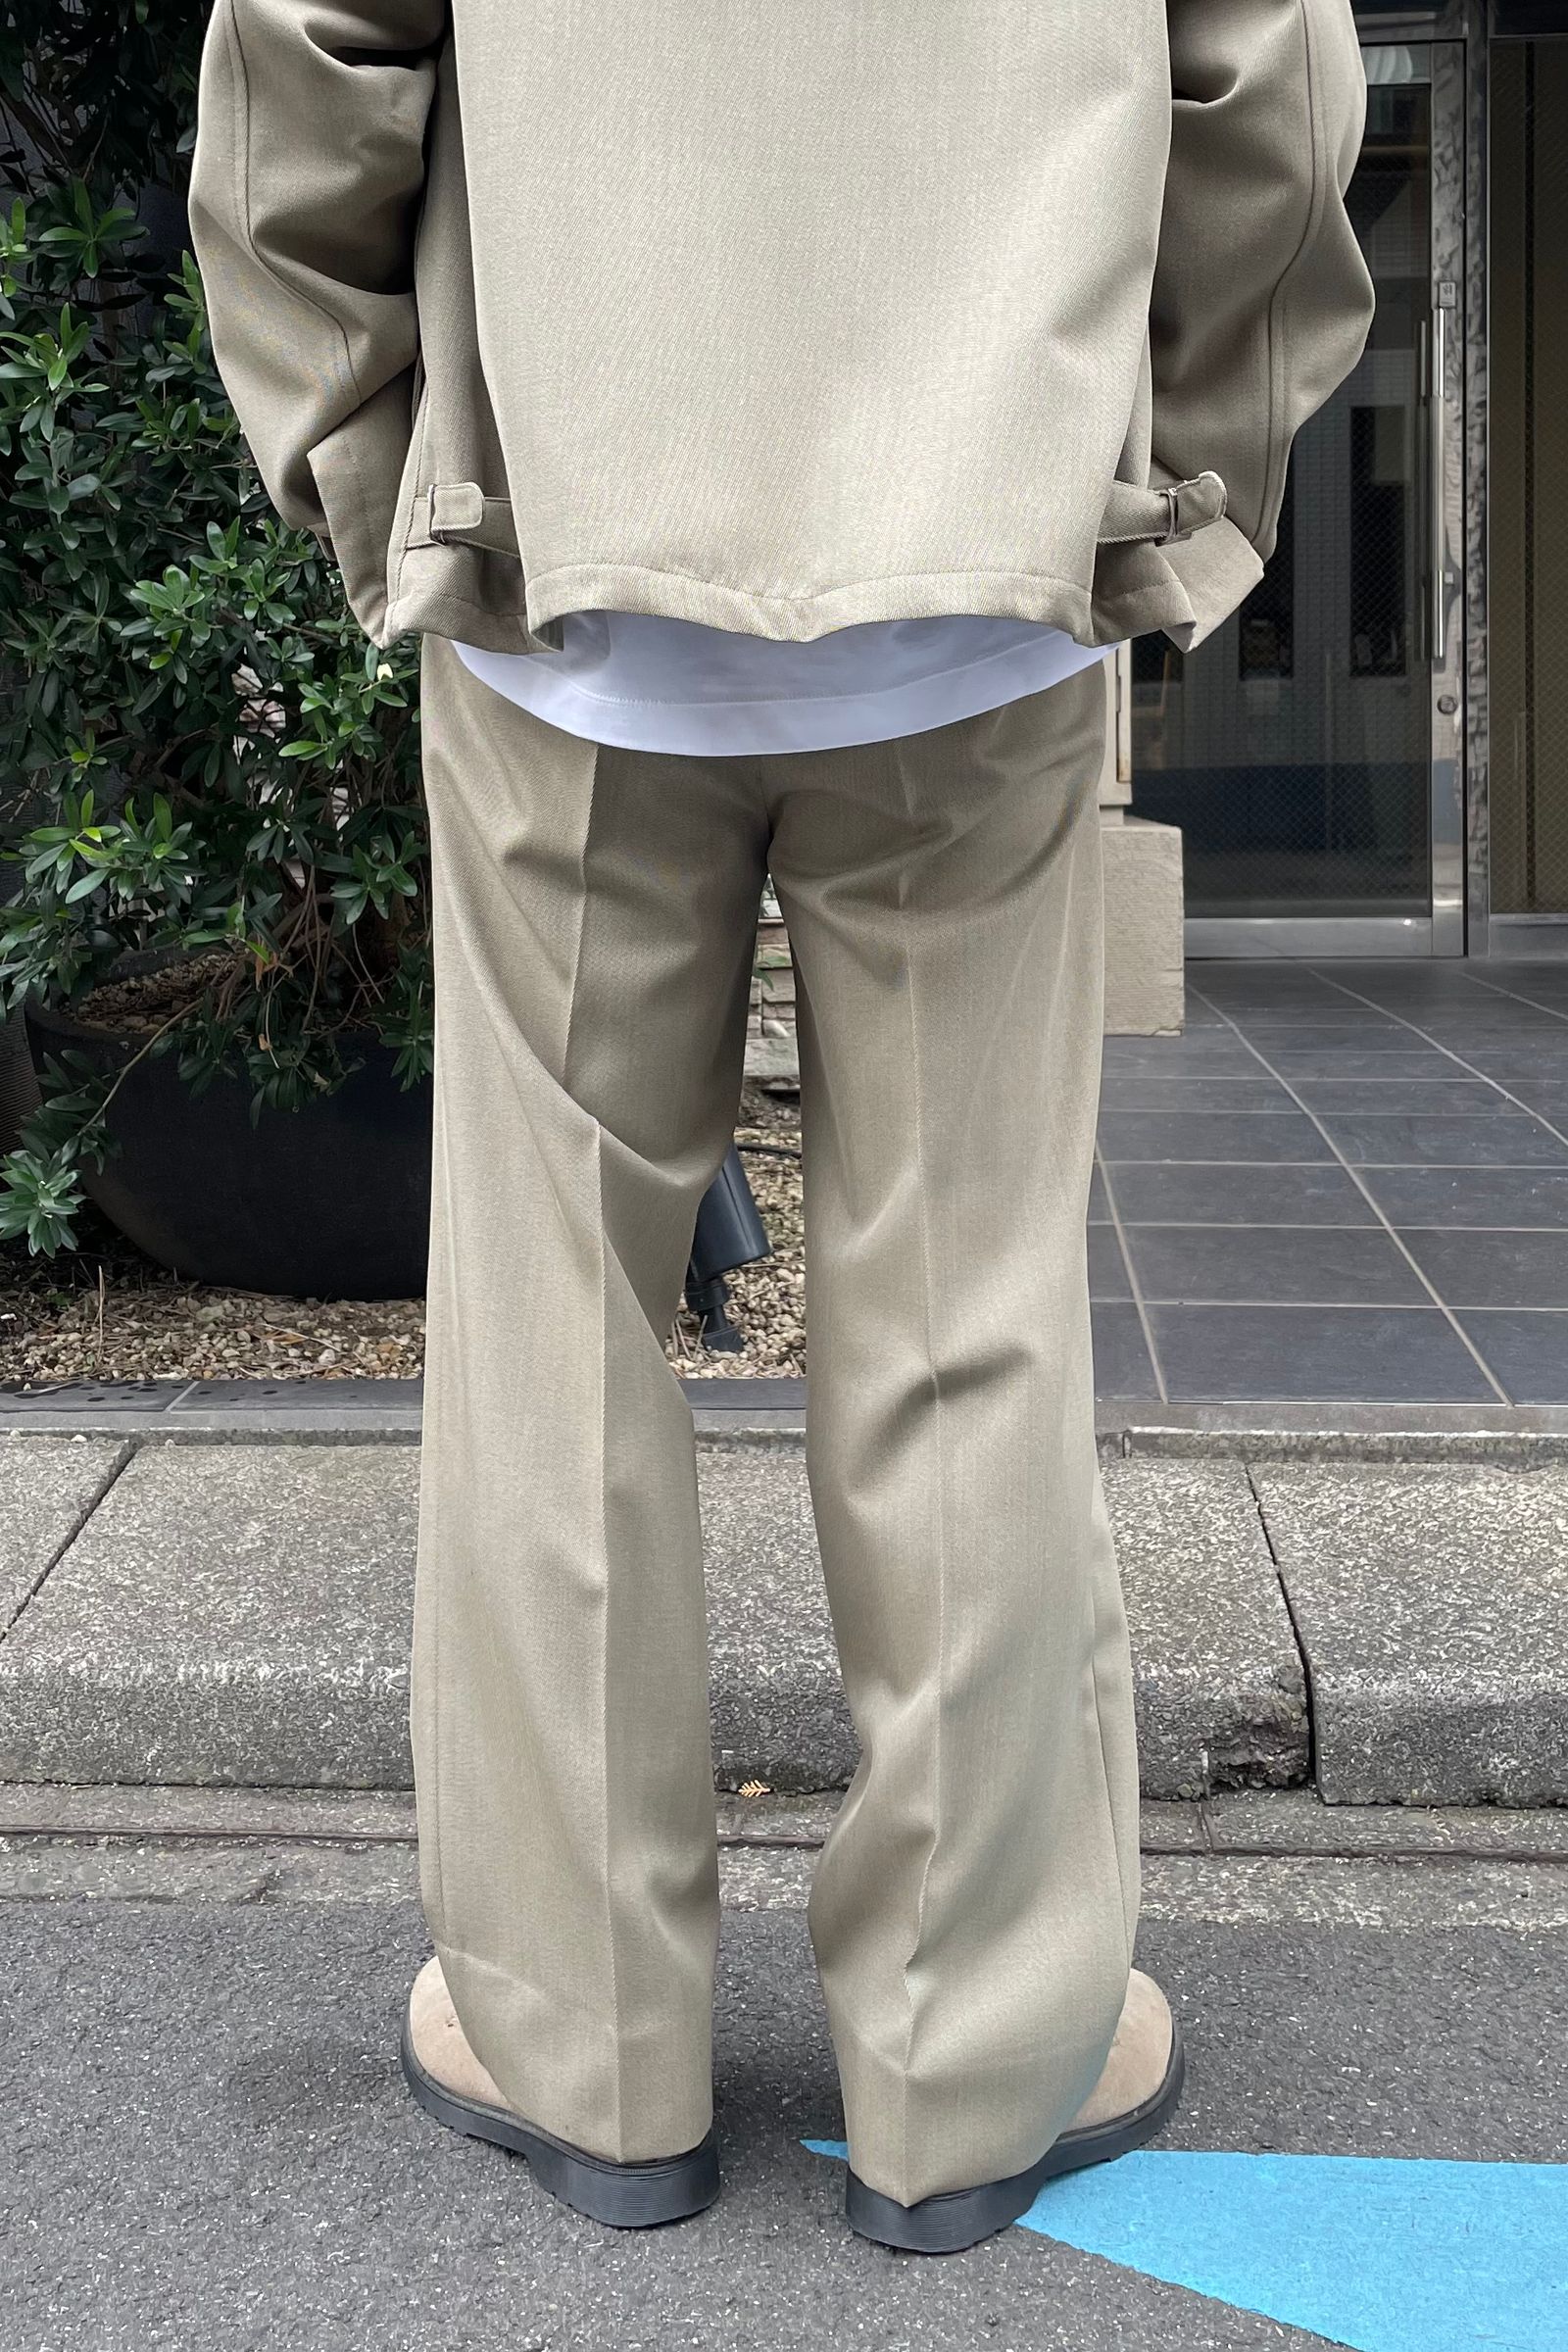 A.PRESSE - covert cloth trousers -khaki- 23ss | asterisk